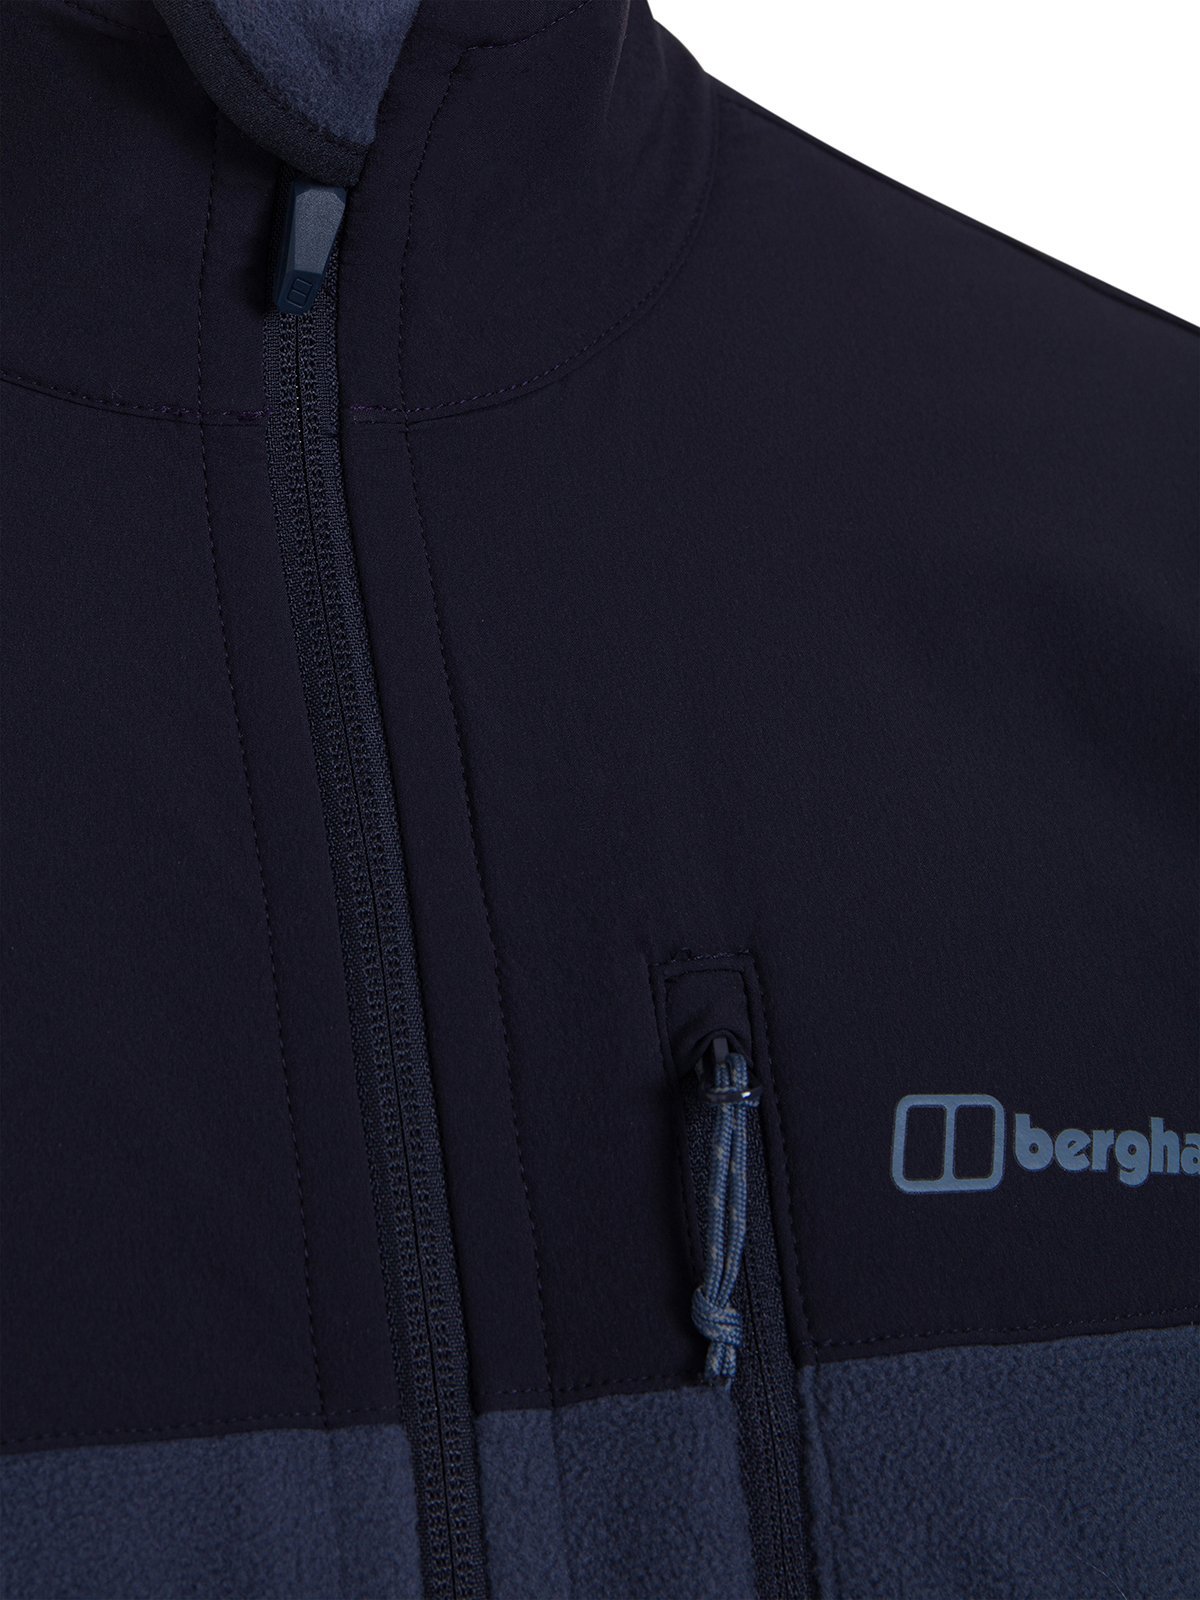 Berghaus Kyberg Full-Zip Polartec Thermal Fleece Jacket